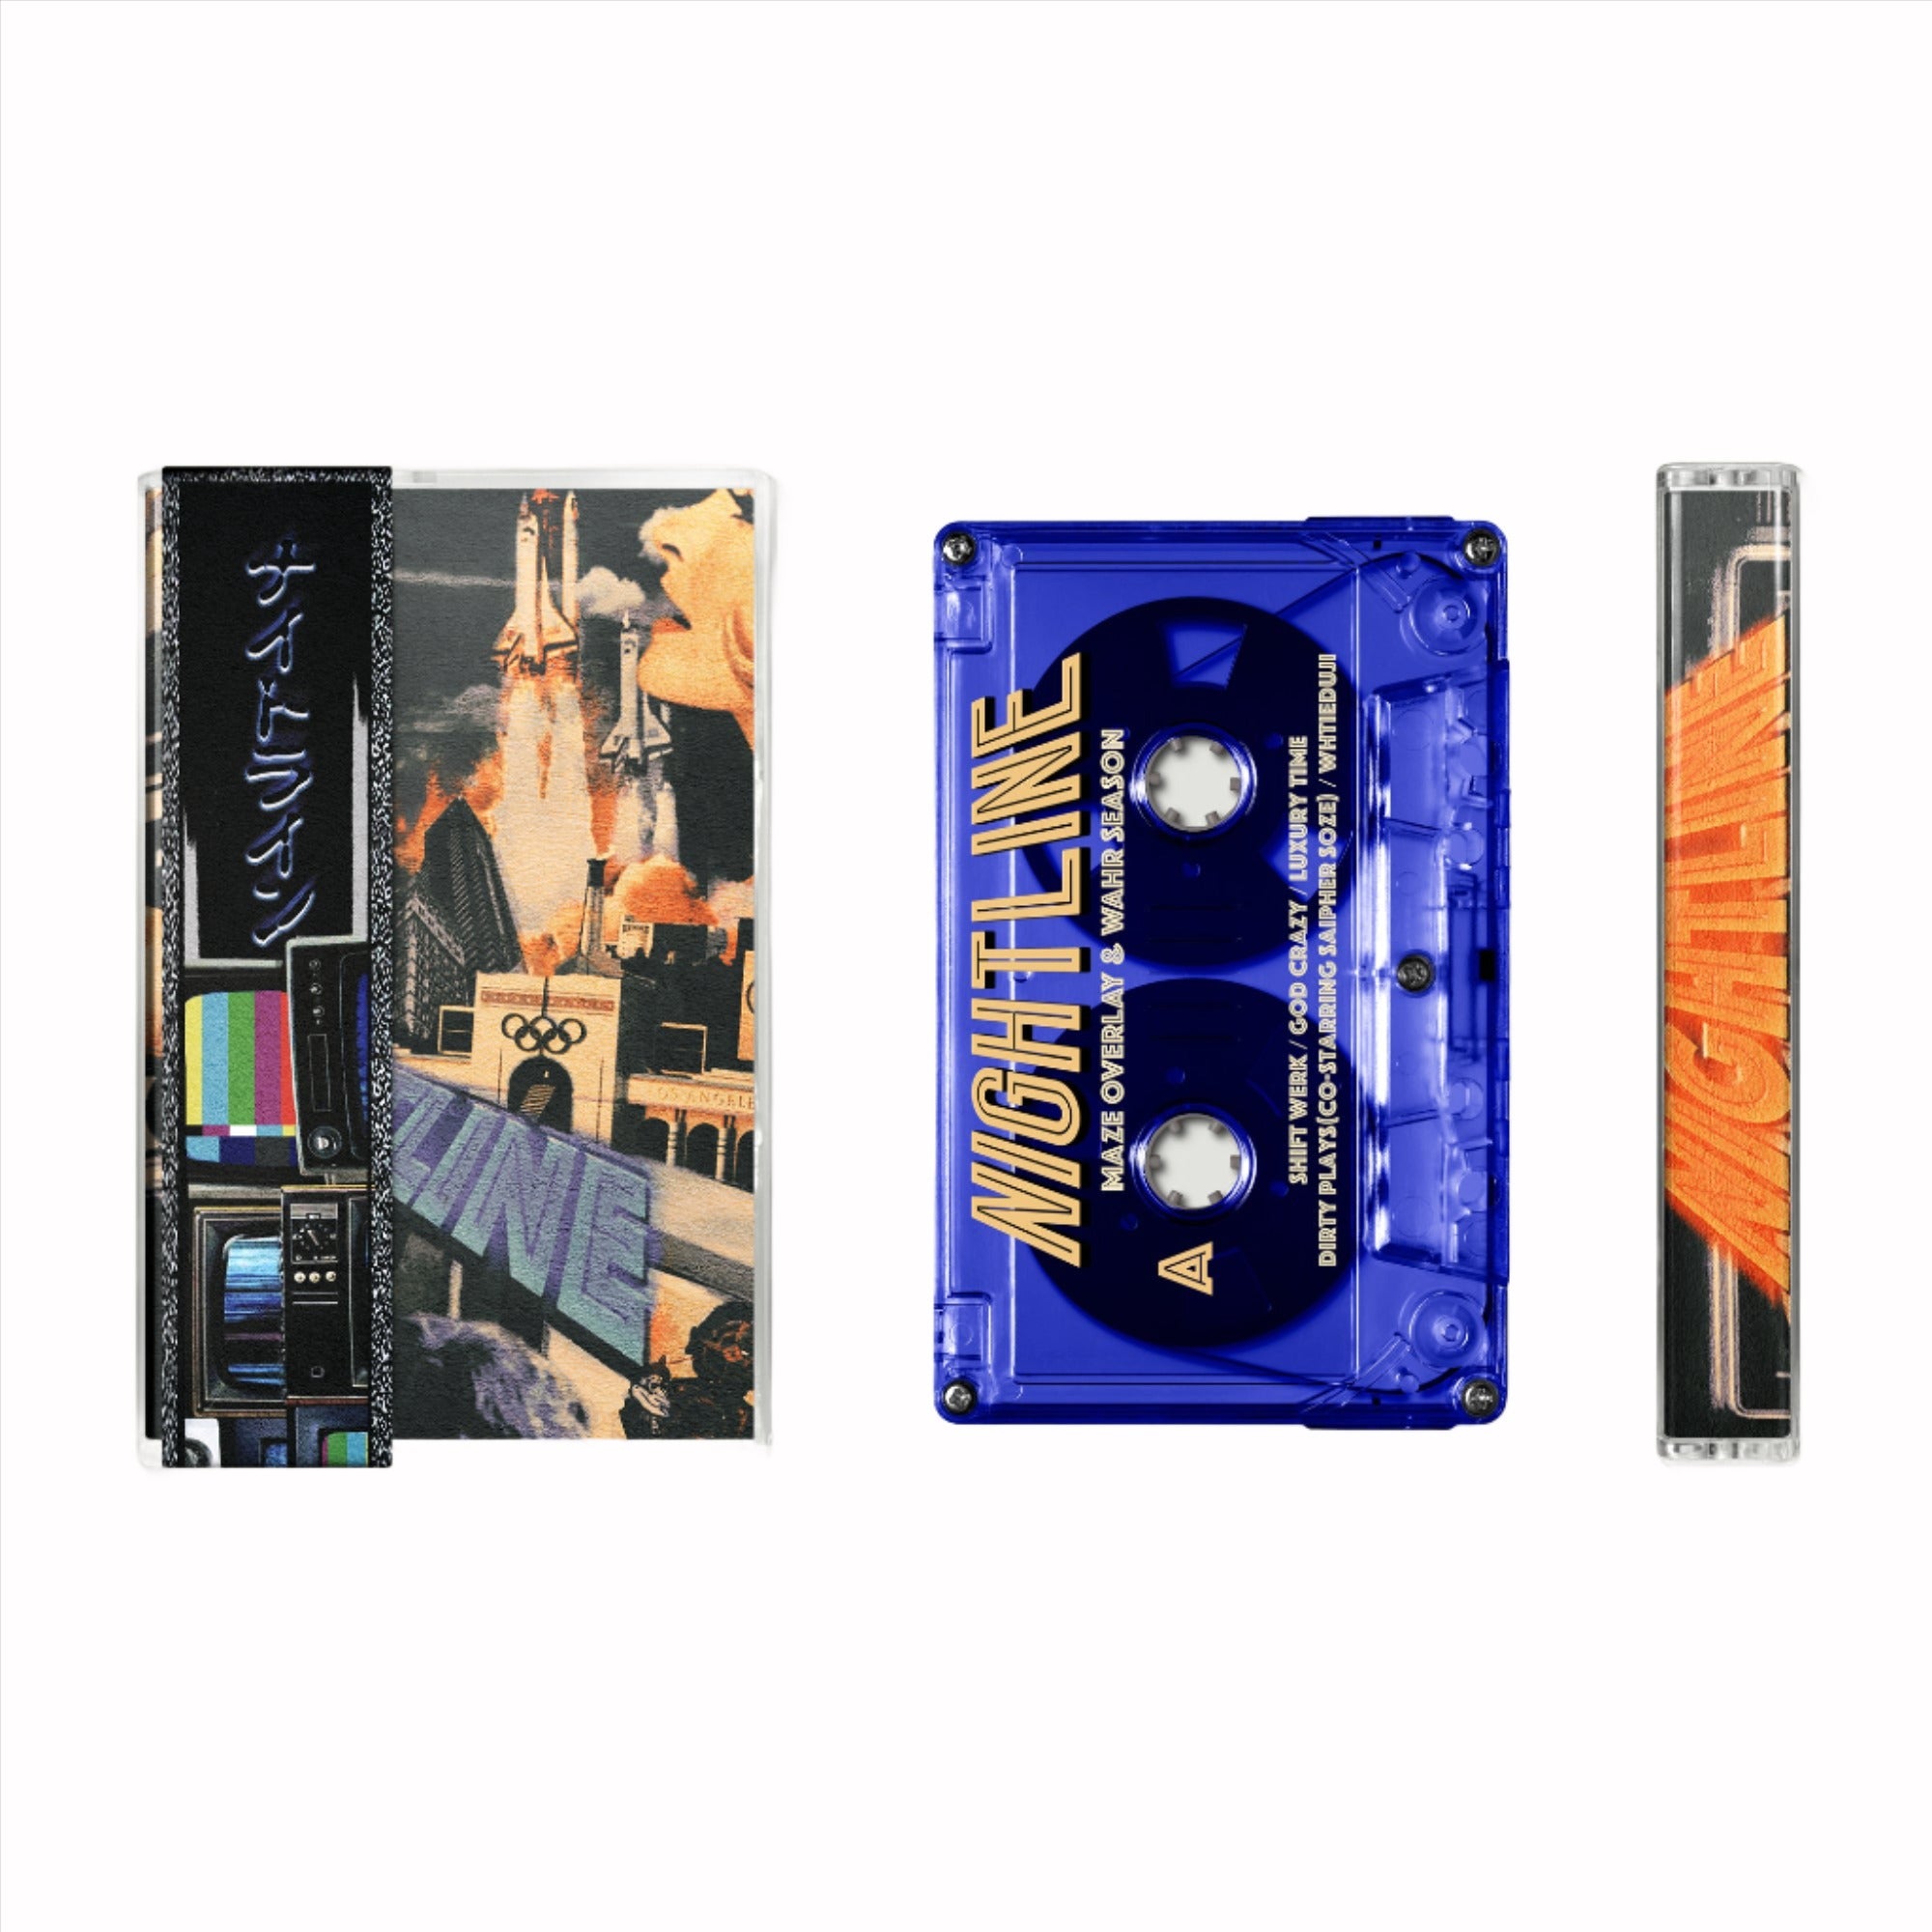 Maze Overlay & Wahr Season - Nightline cassette tape with OBI